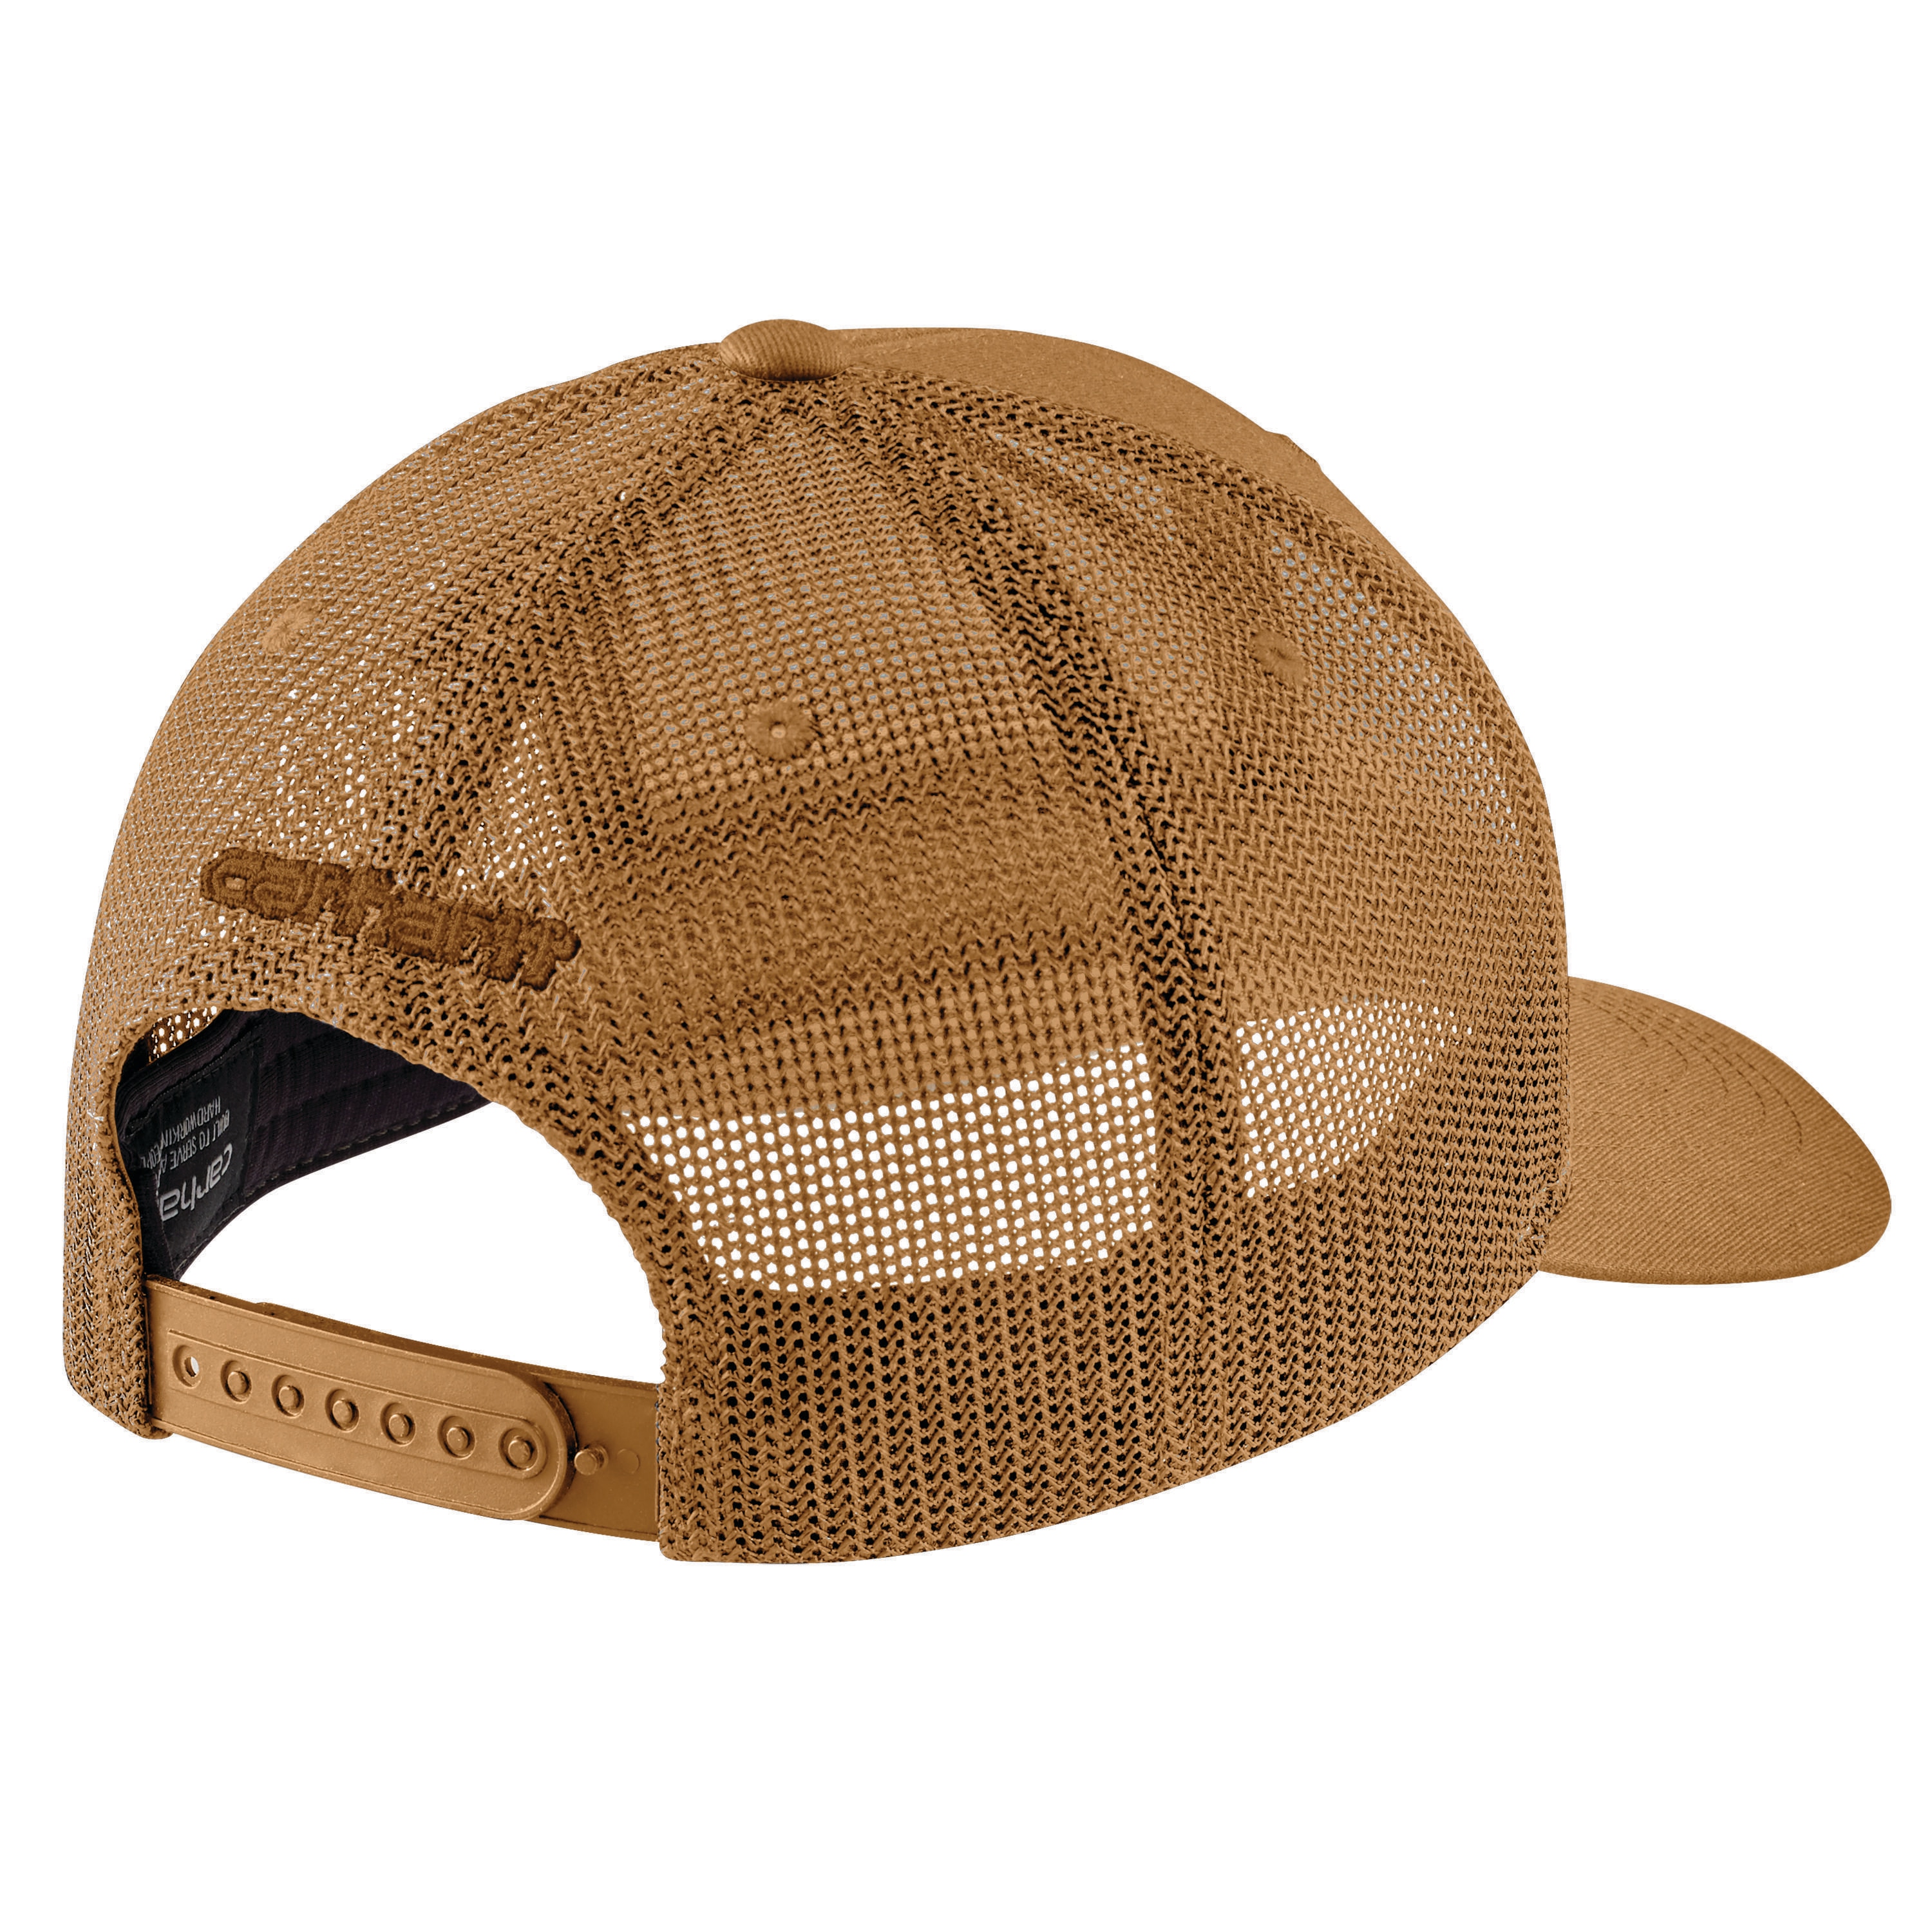 Carhartt Men\'s Carhartt Brown/Honeycomb in Cotton the Hats Cap department Baseball at